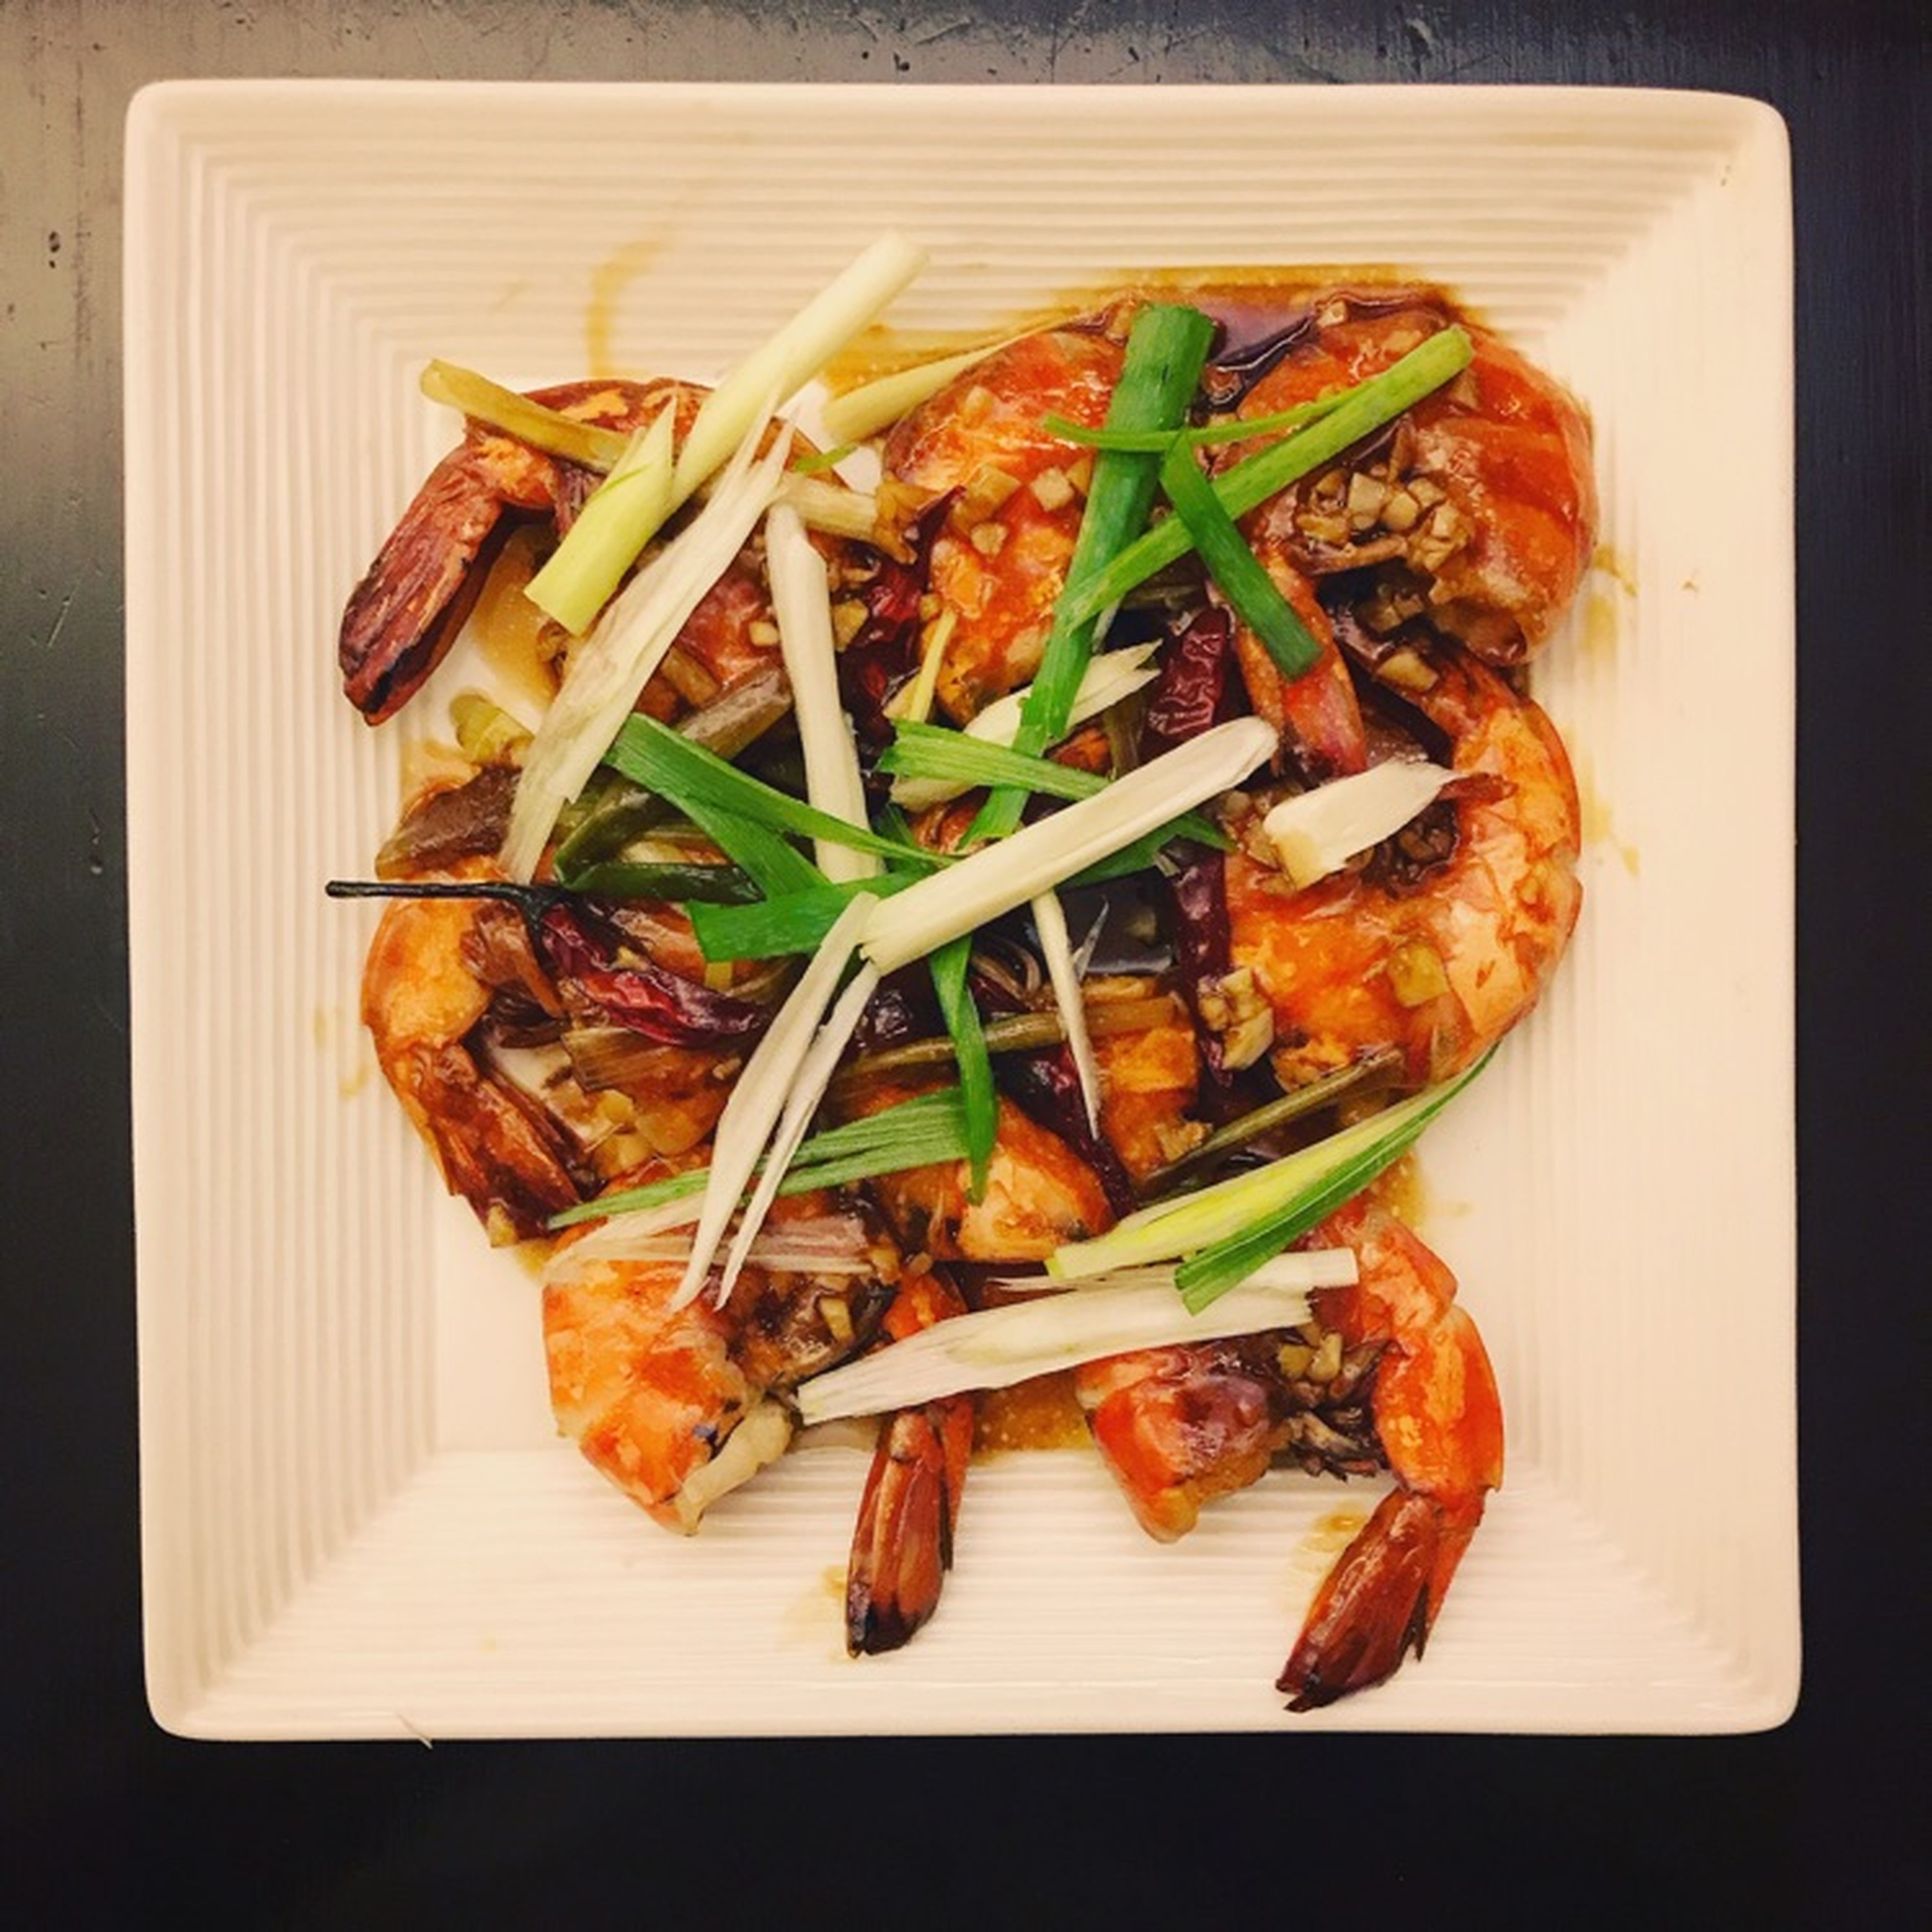 Braised large shrimp